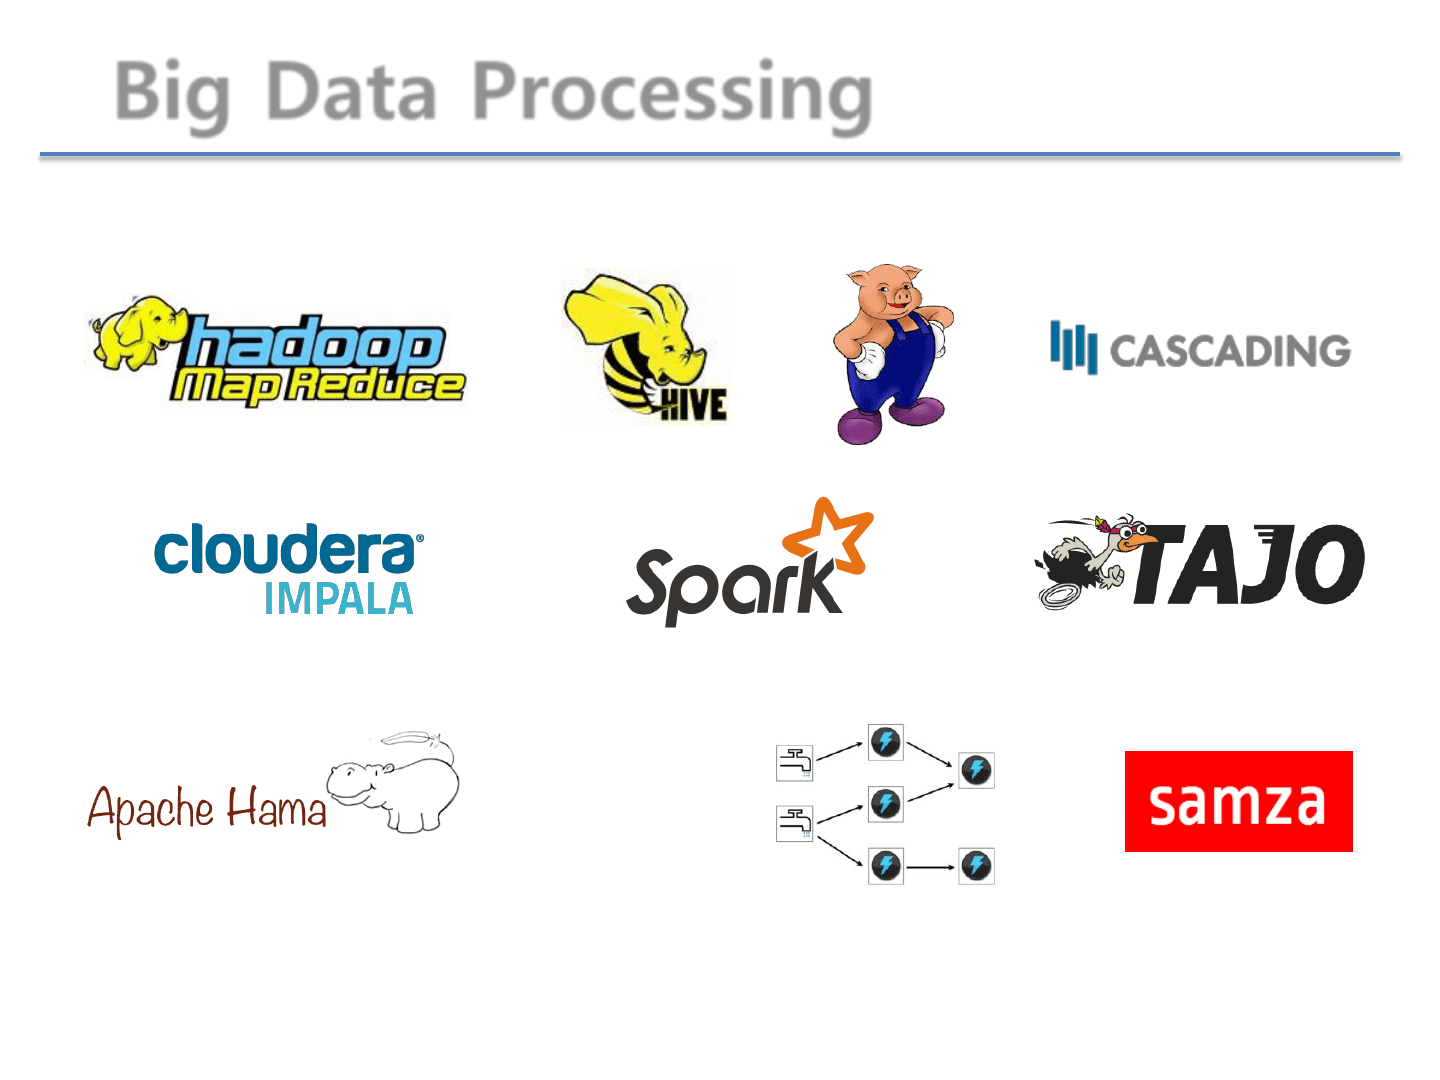 Scala for big data